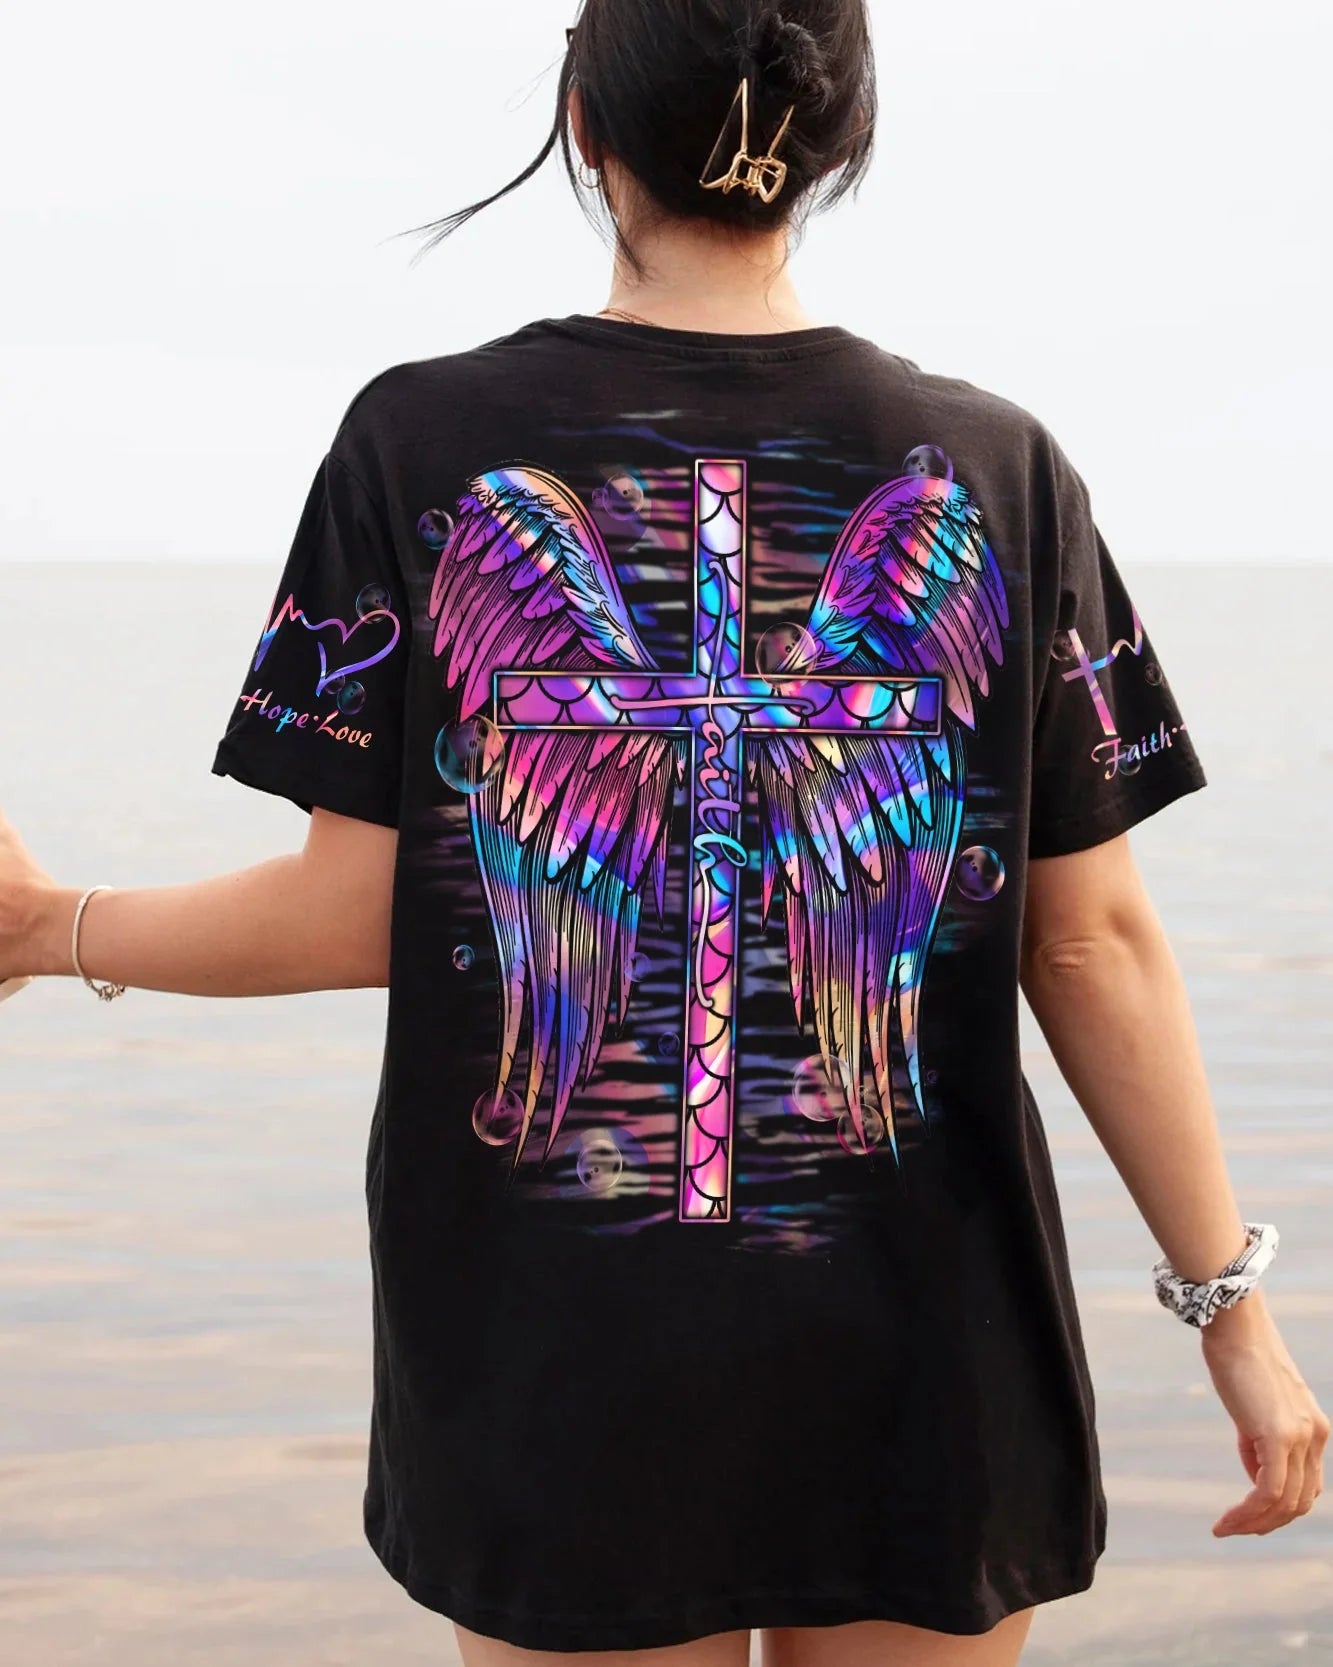 Christianartbag 3D T-Shirt For Women, Faith Cross Wings Mermaid Hologram,Christian Shirt, Faithful Fashion, 3D Printed Shirts for Christian Women - Christian Art Bag